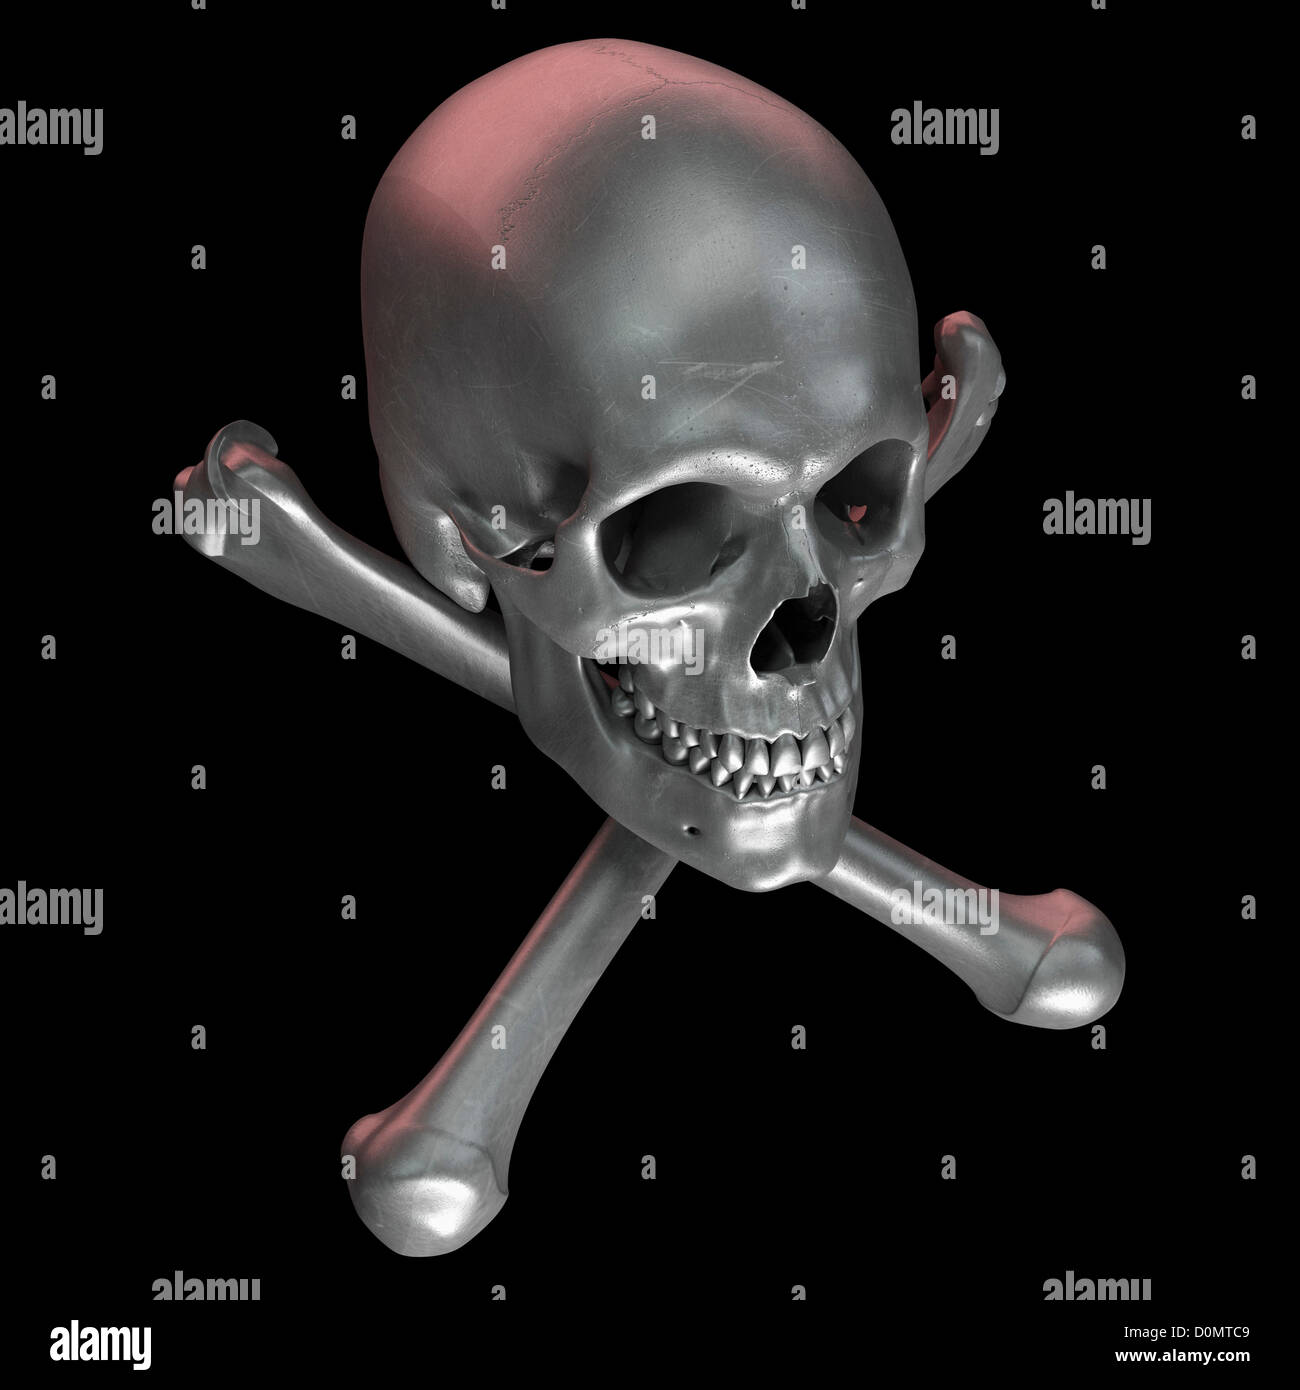 Metallic grey skull and crossbones symbolizing danger or death. Stock Photo